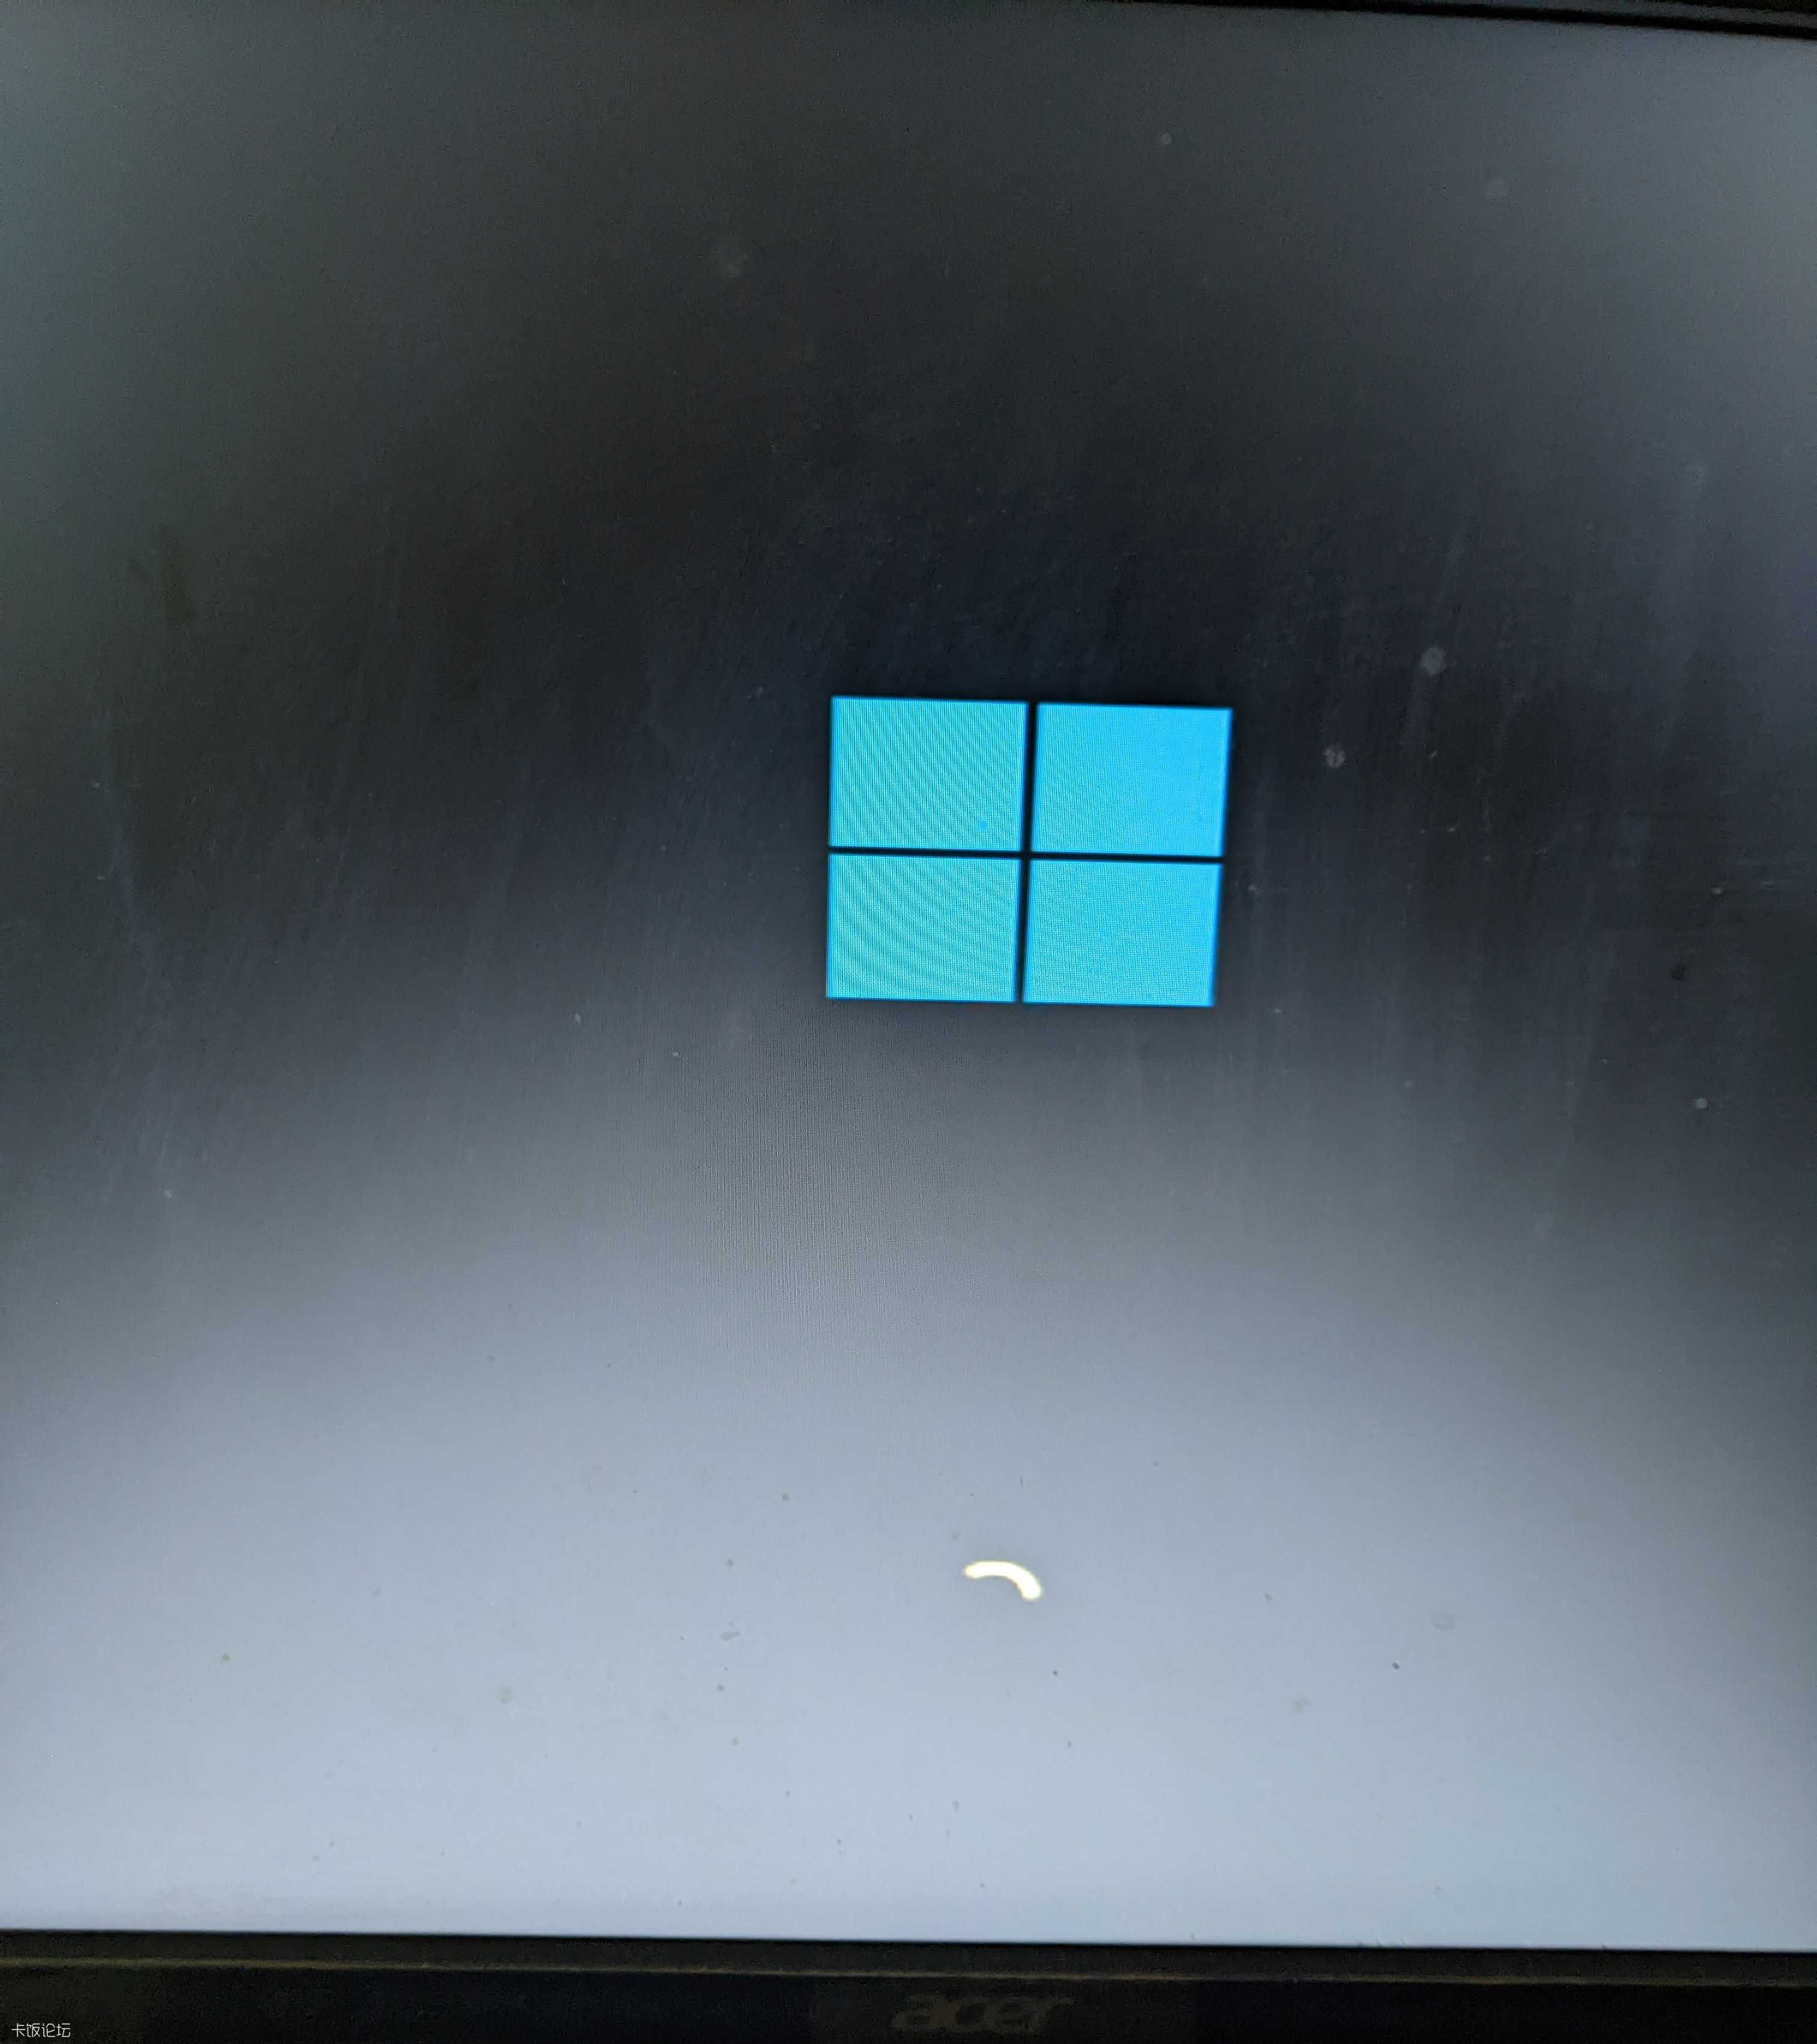 windows聚焦不显示图片 锁屏壁纸不显示 只有蓝色的 但是还是会显示“喜欢吗‘ - Microsoft Community